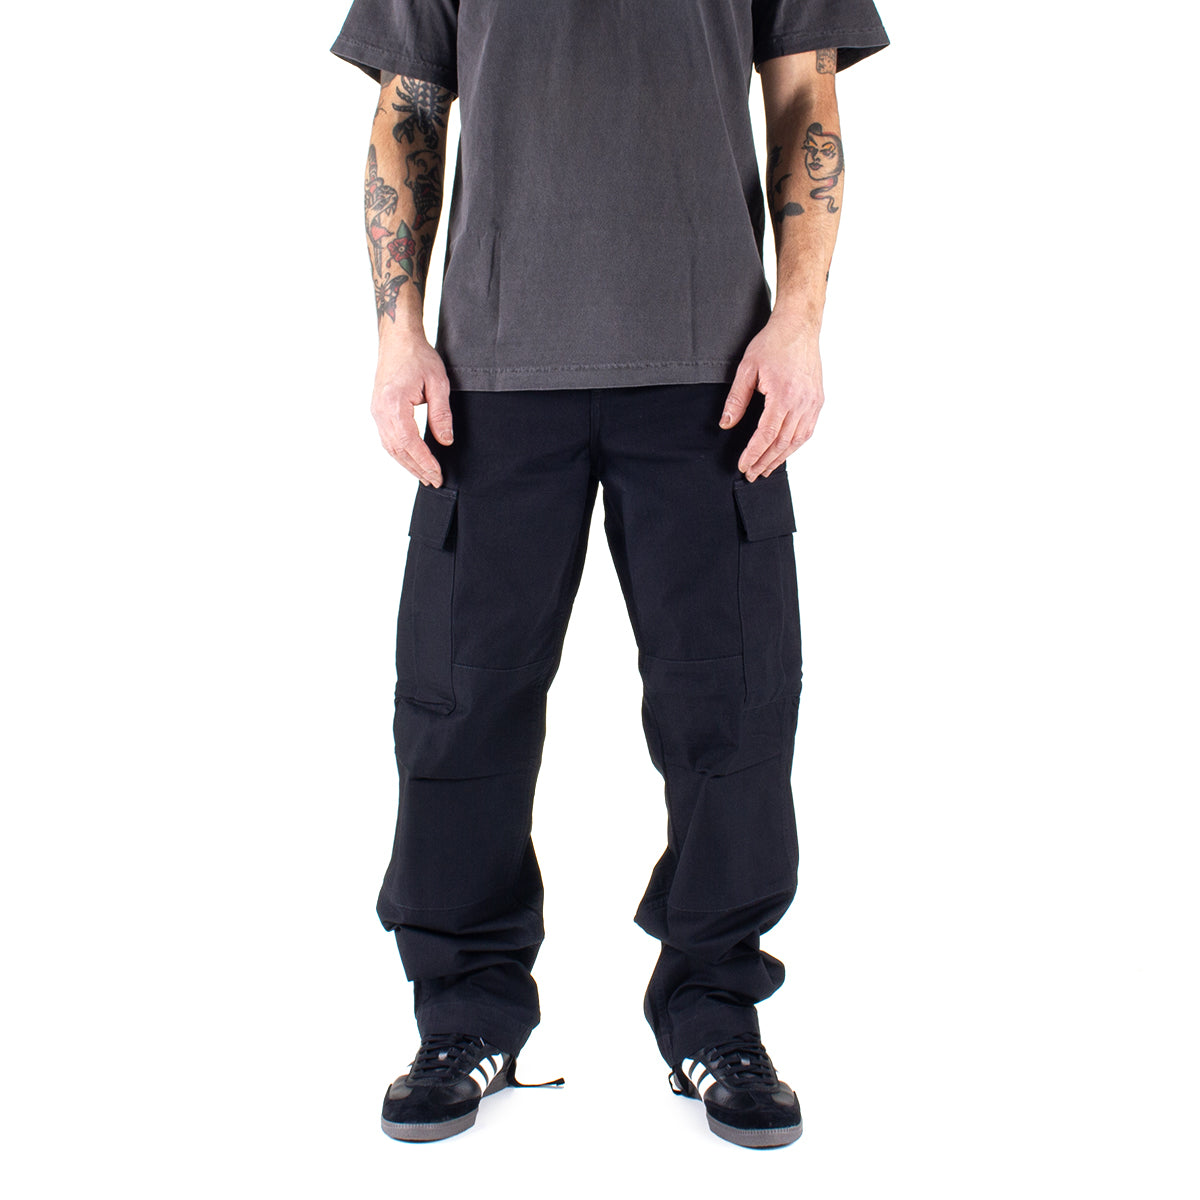 Carhartt WIP | Regular Cargo Pant Style # I032467-8902 Color : Black